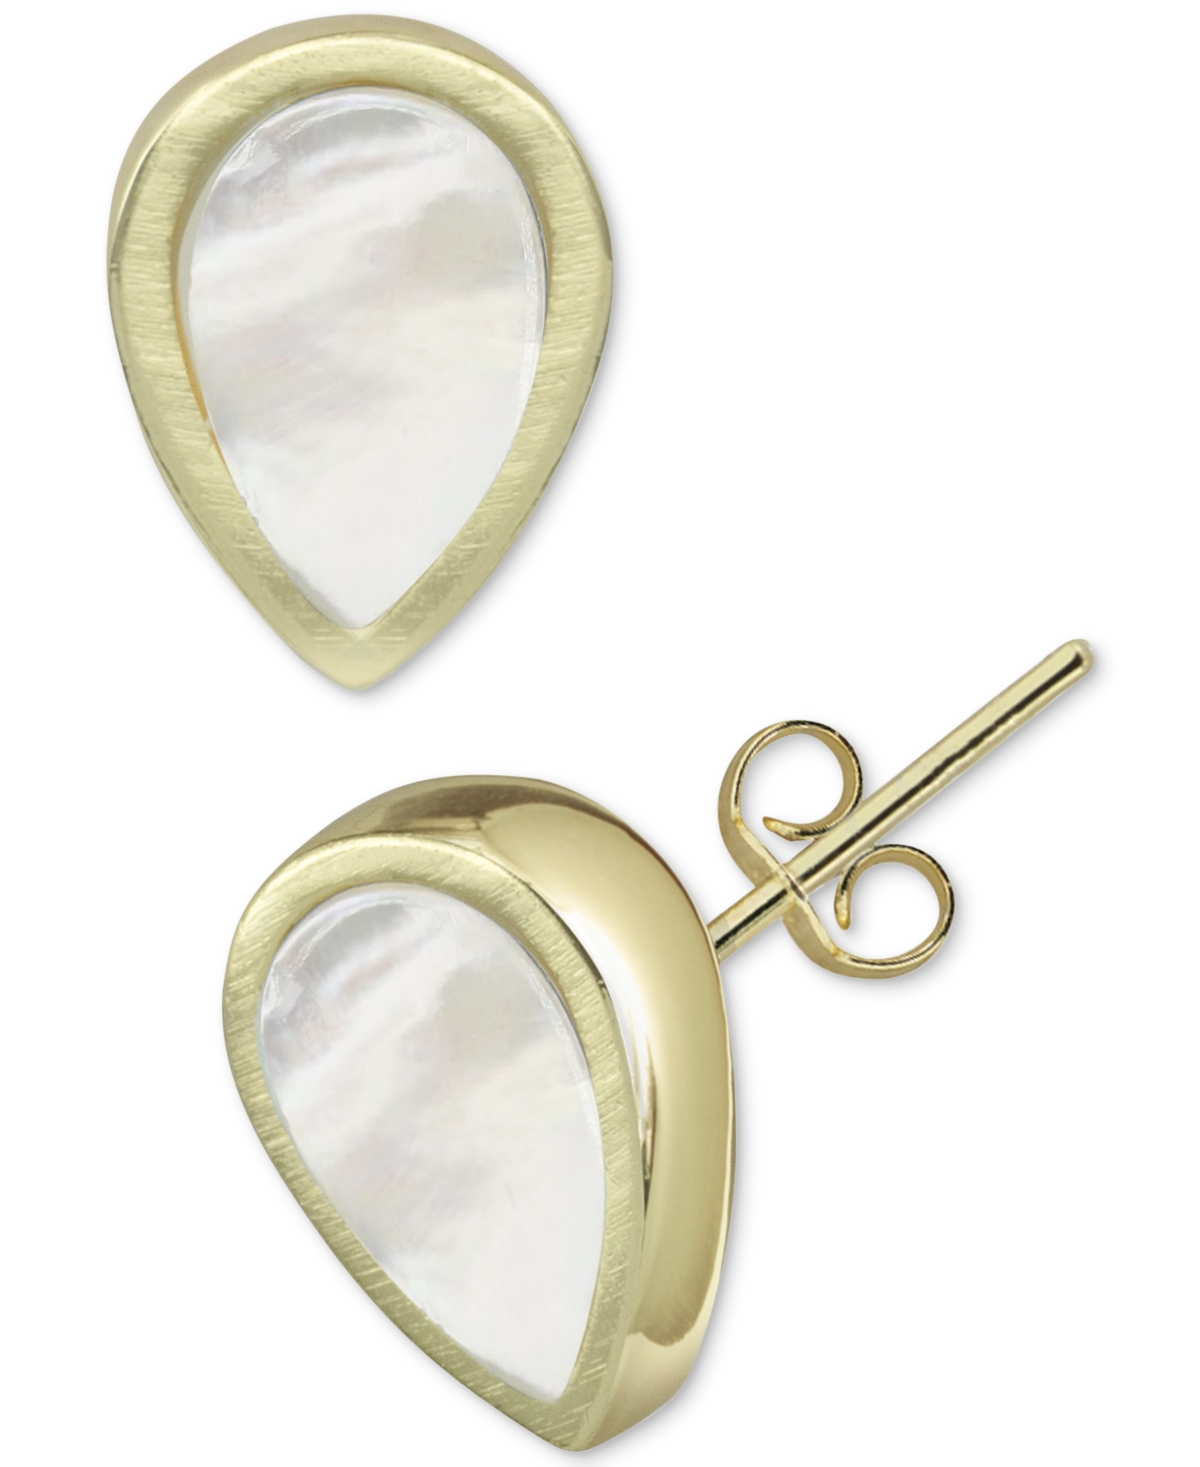 Argento Vivo Mother-of-Pearl Teardrop Stud Earrings in Gold-Plated Sterling Silver